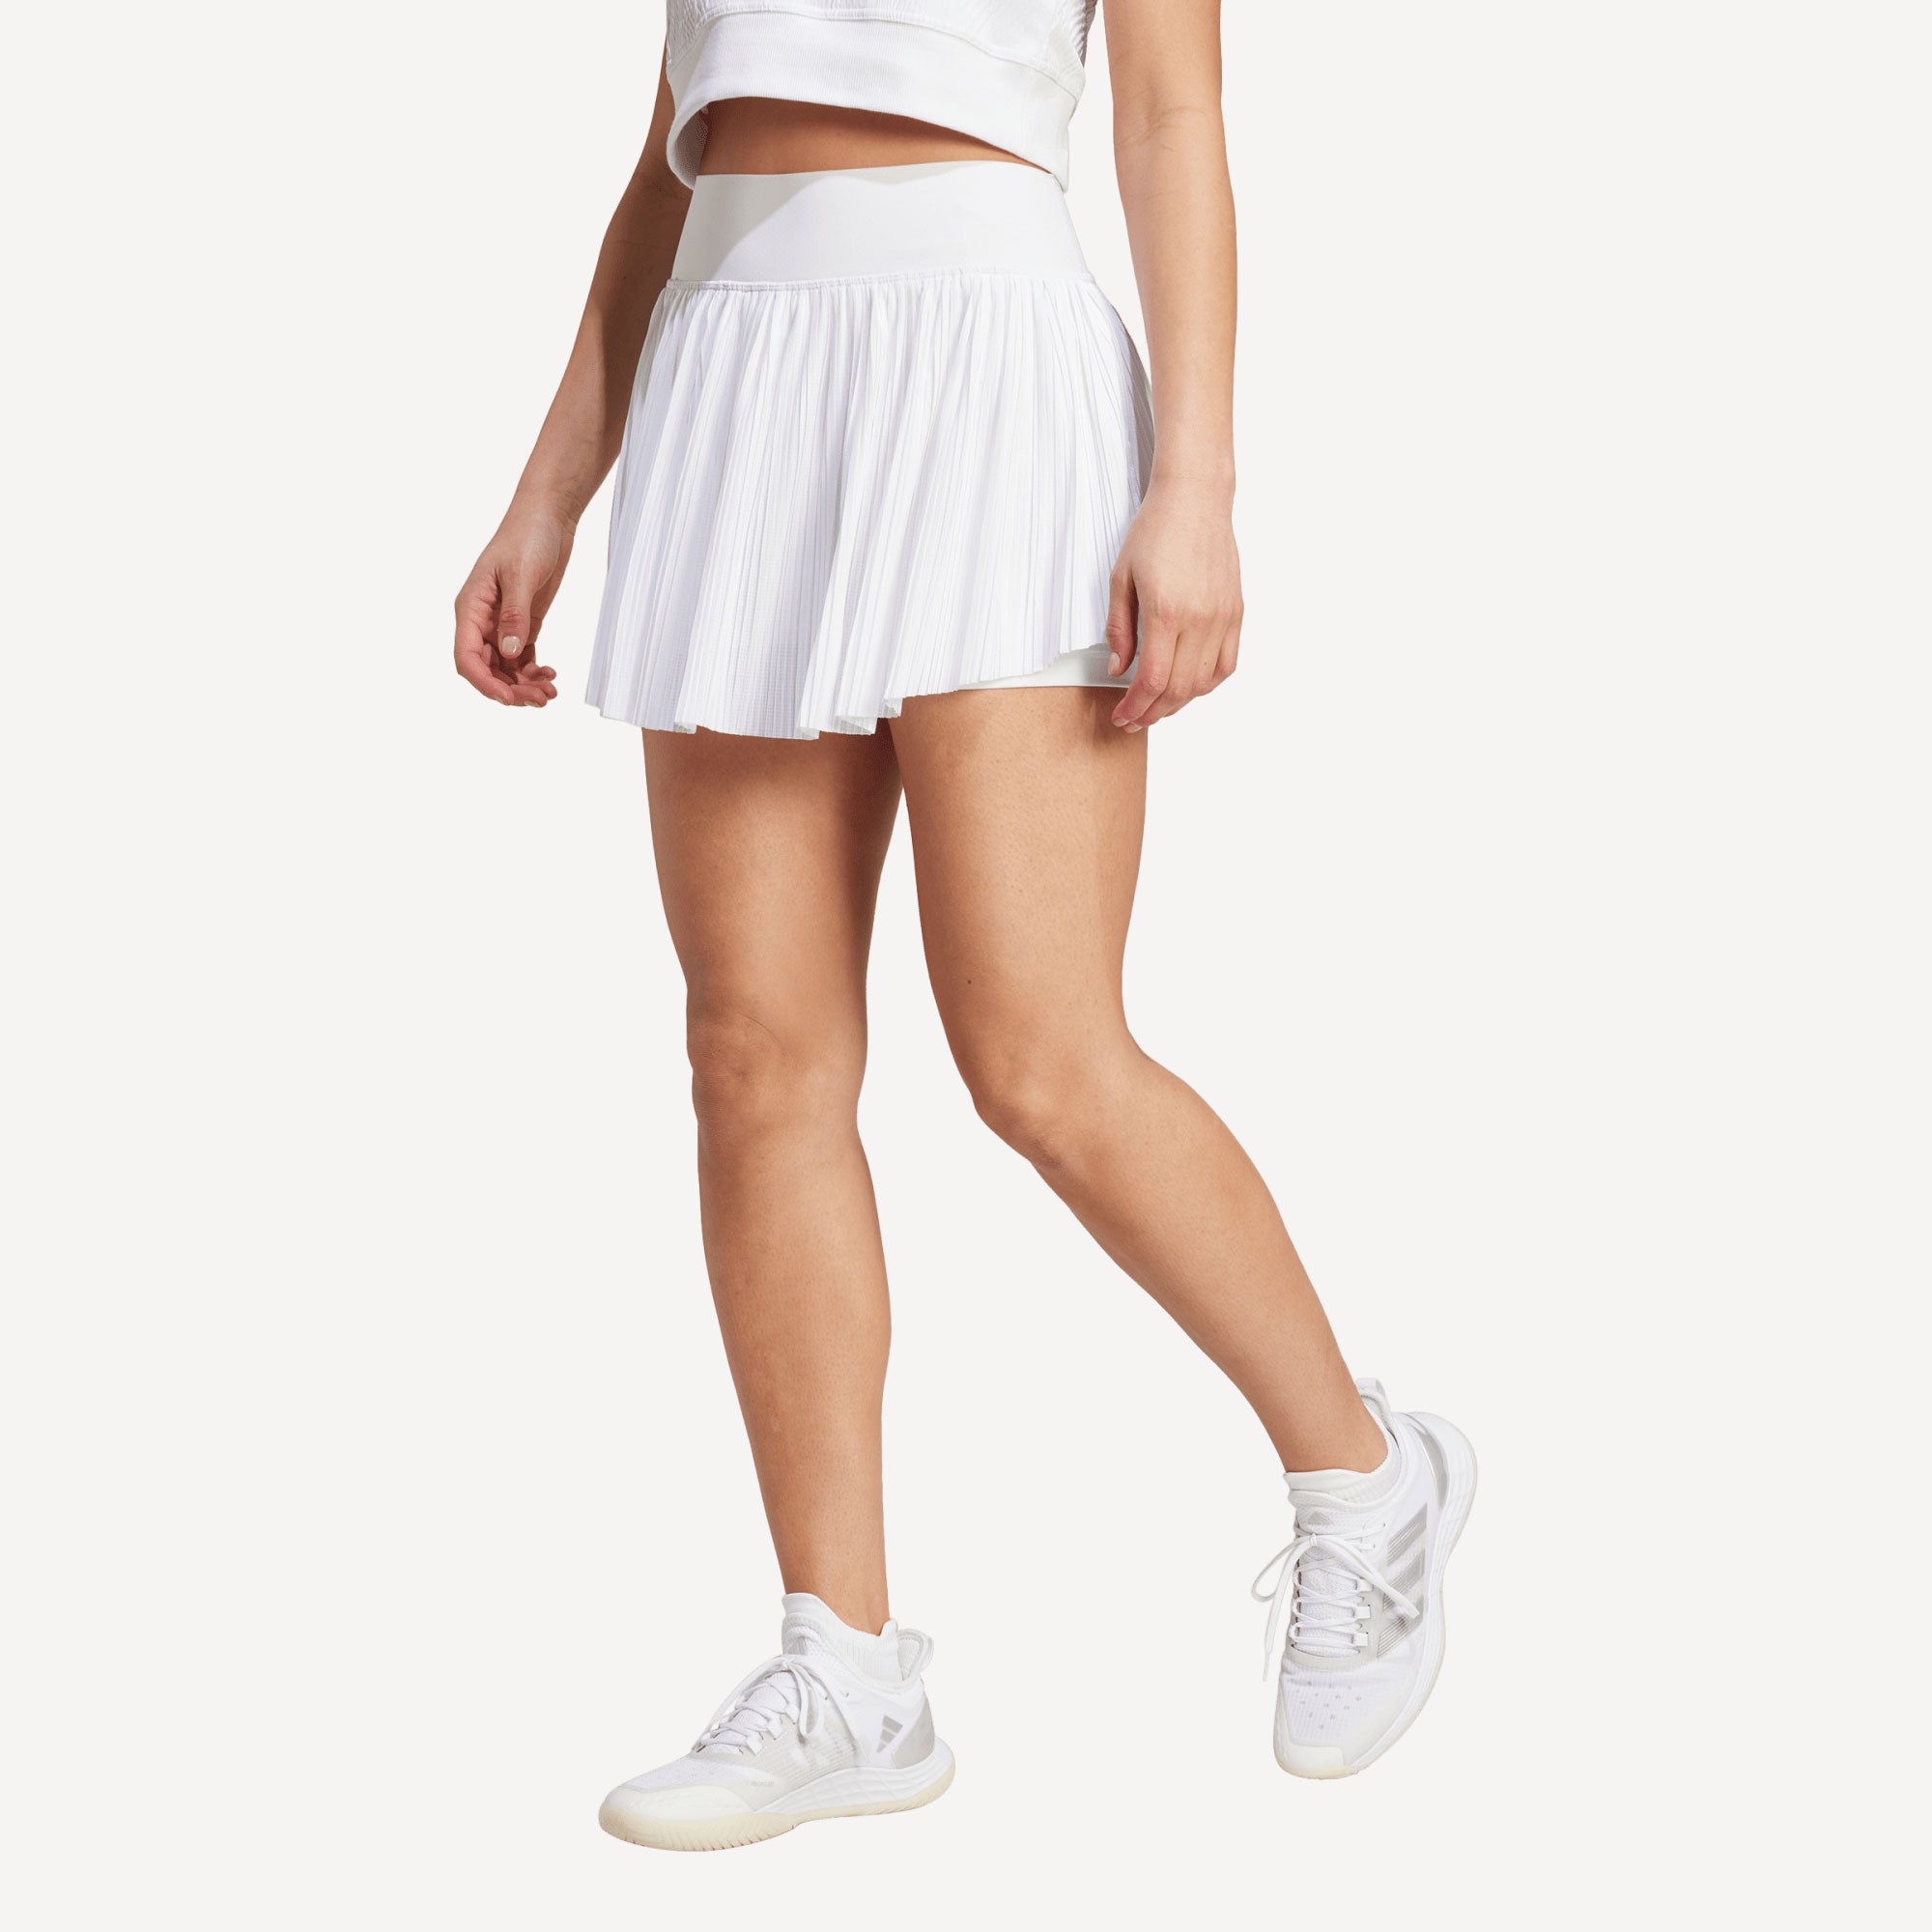 adidas Pro London Women's Pleat Tennis Skirt - White (1)